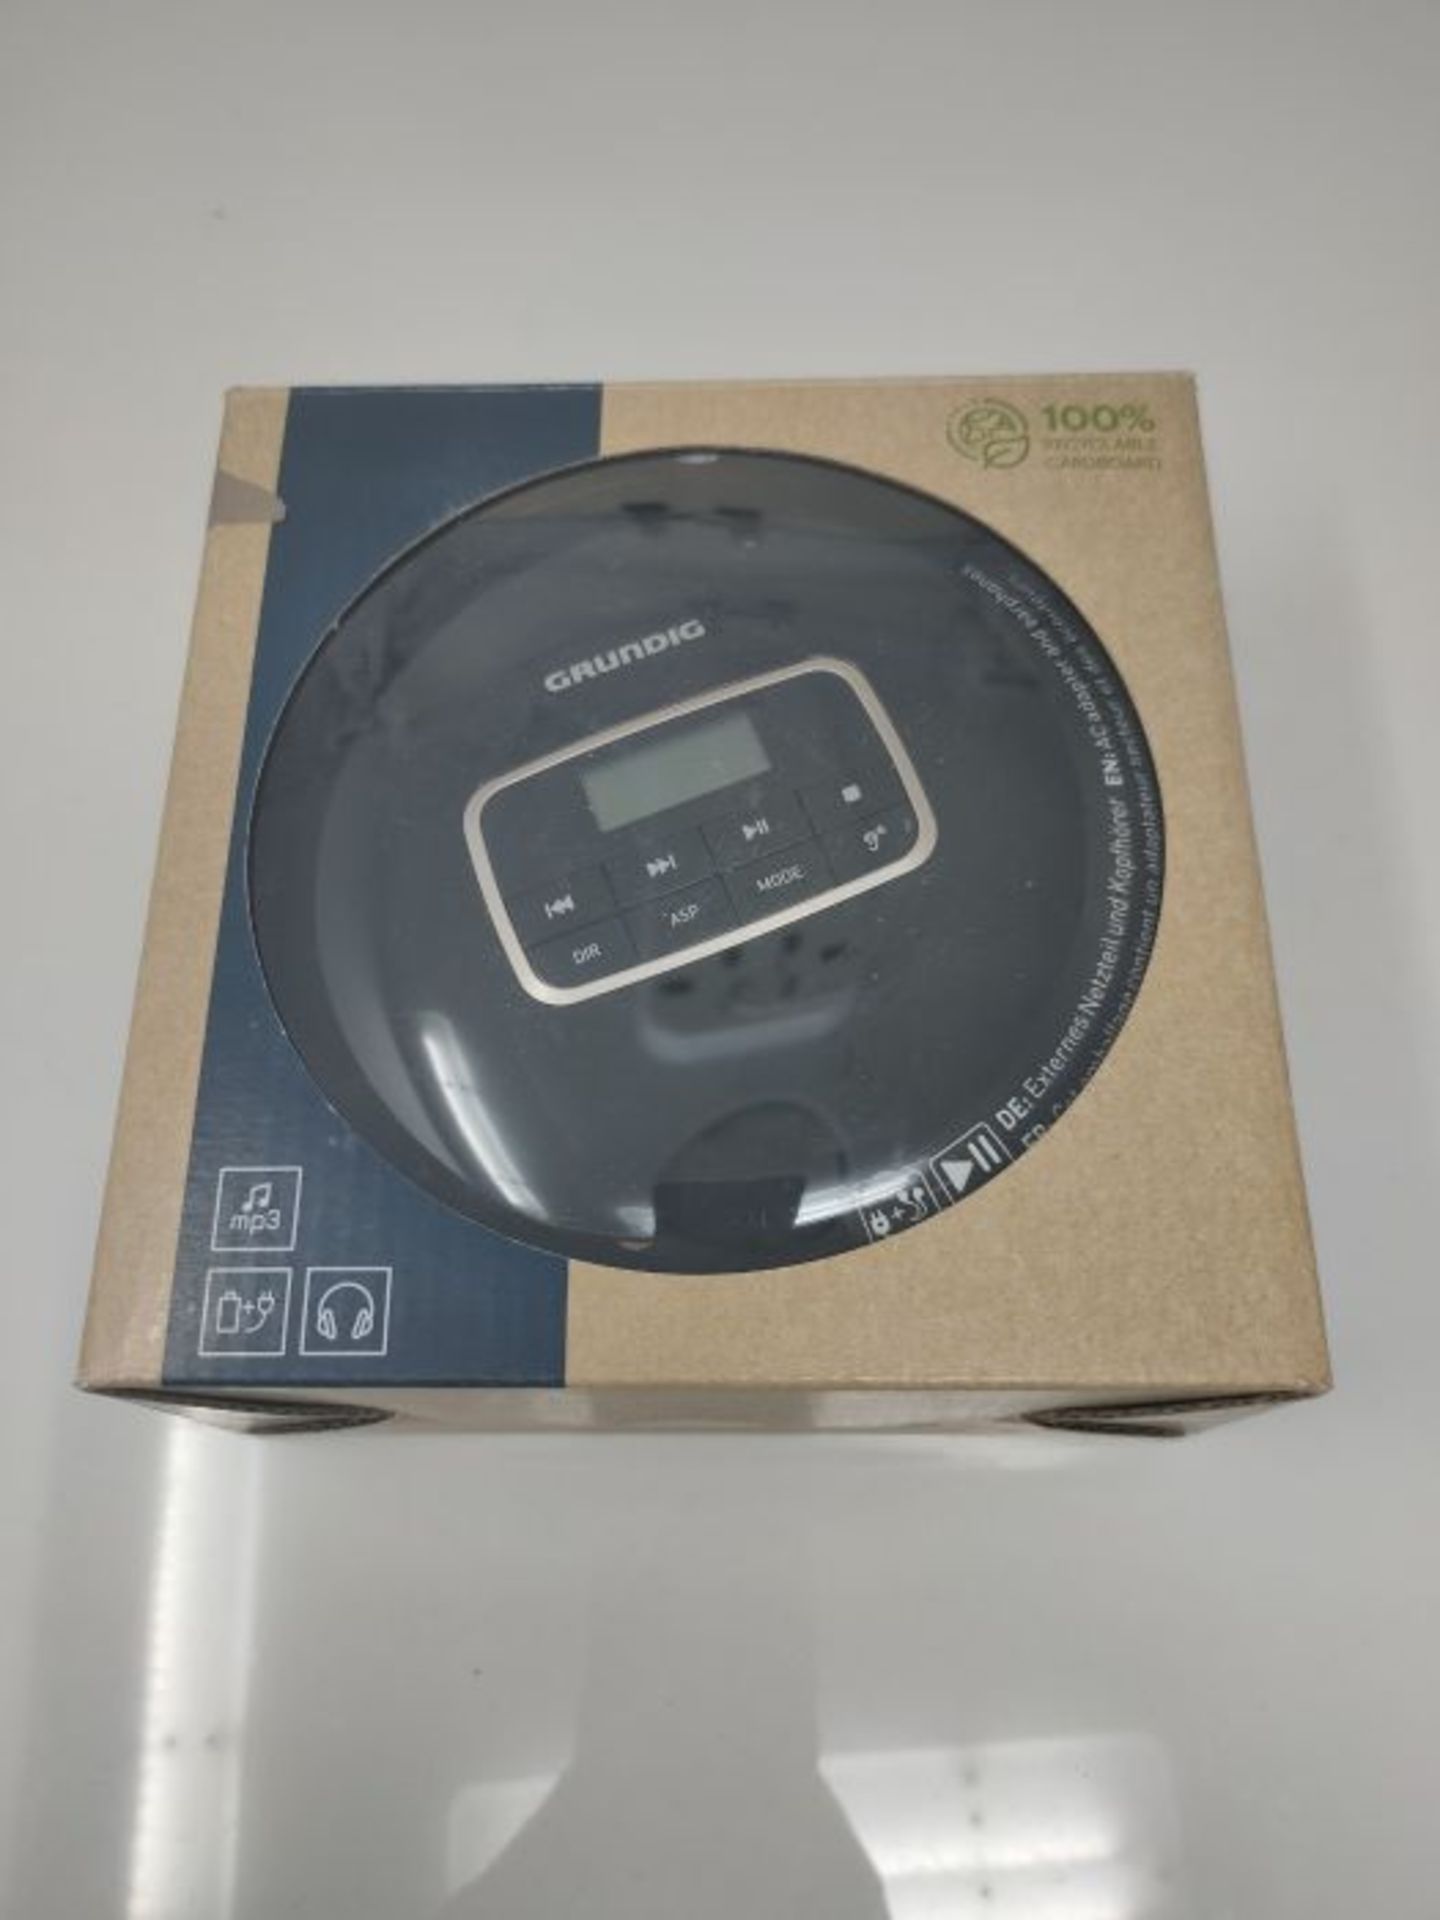 Grundig GCDP 8000 GDR1405 Tragbarer CD-Player Schwarz - Image 2 of 3